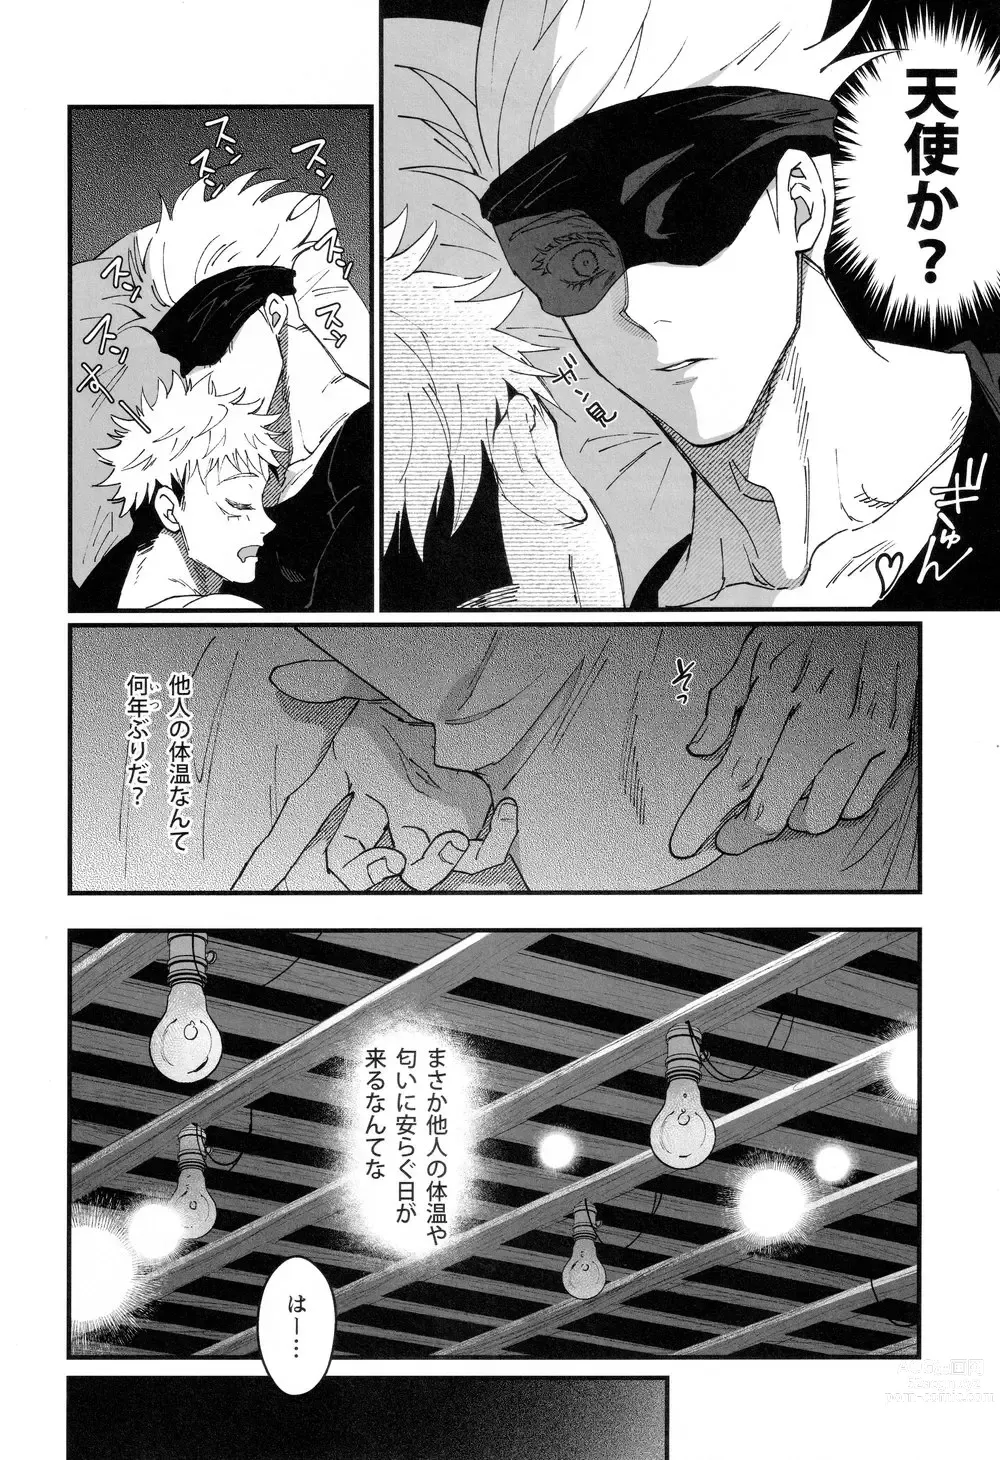 Page 12 of doujinshi Gachikoi Monster